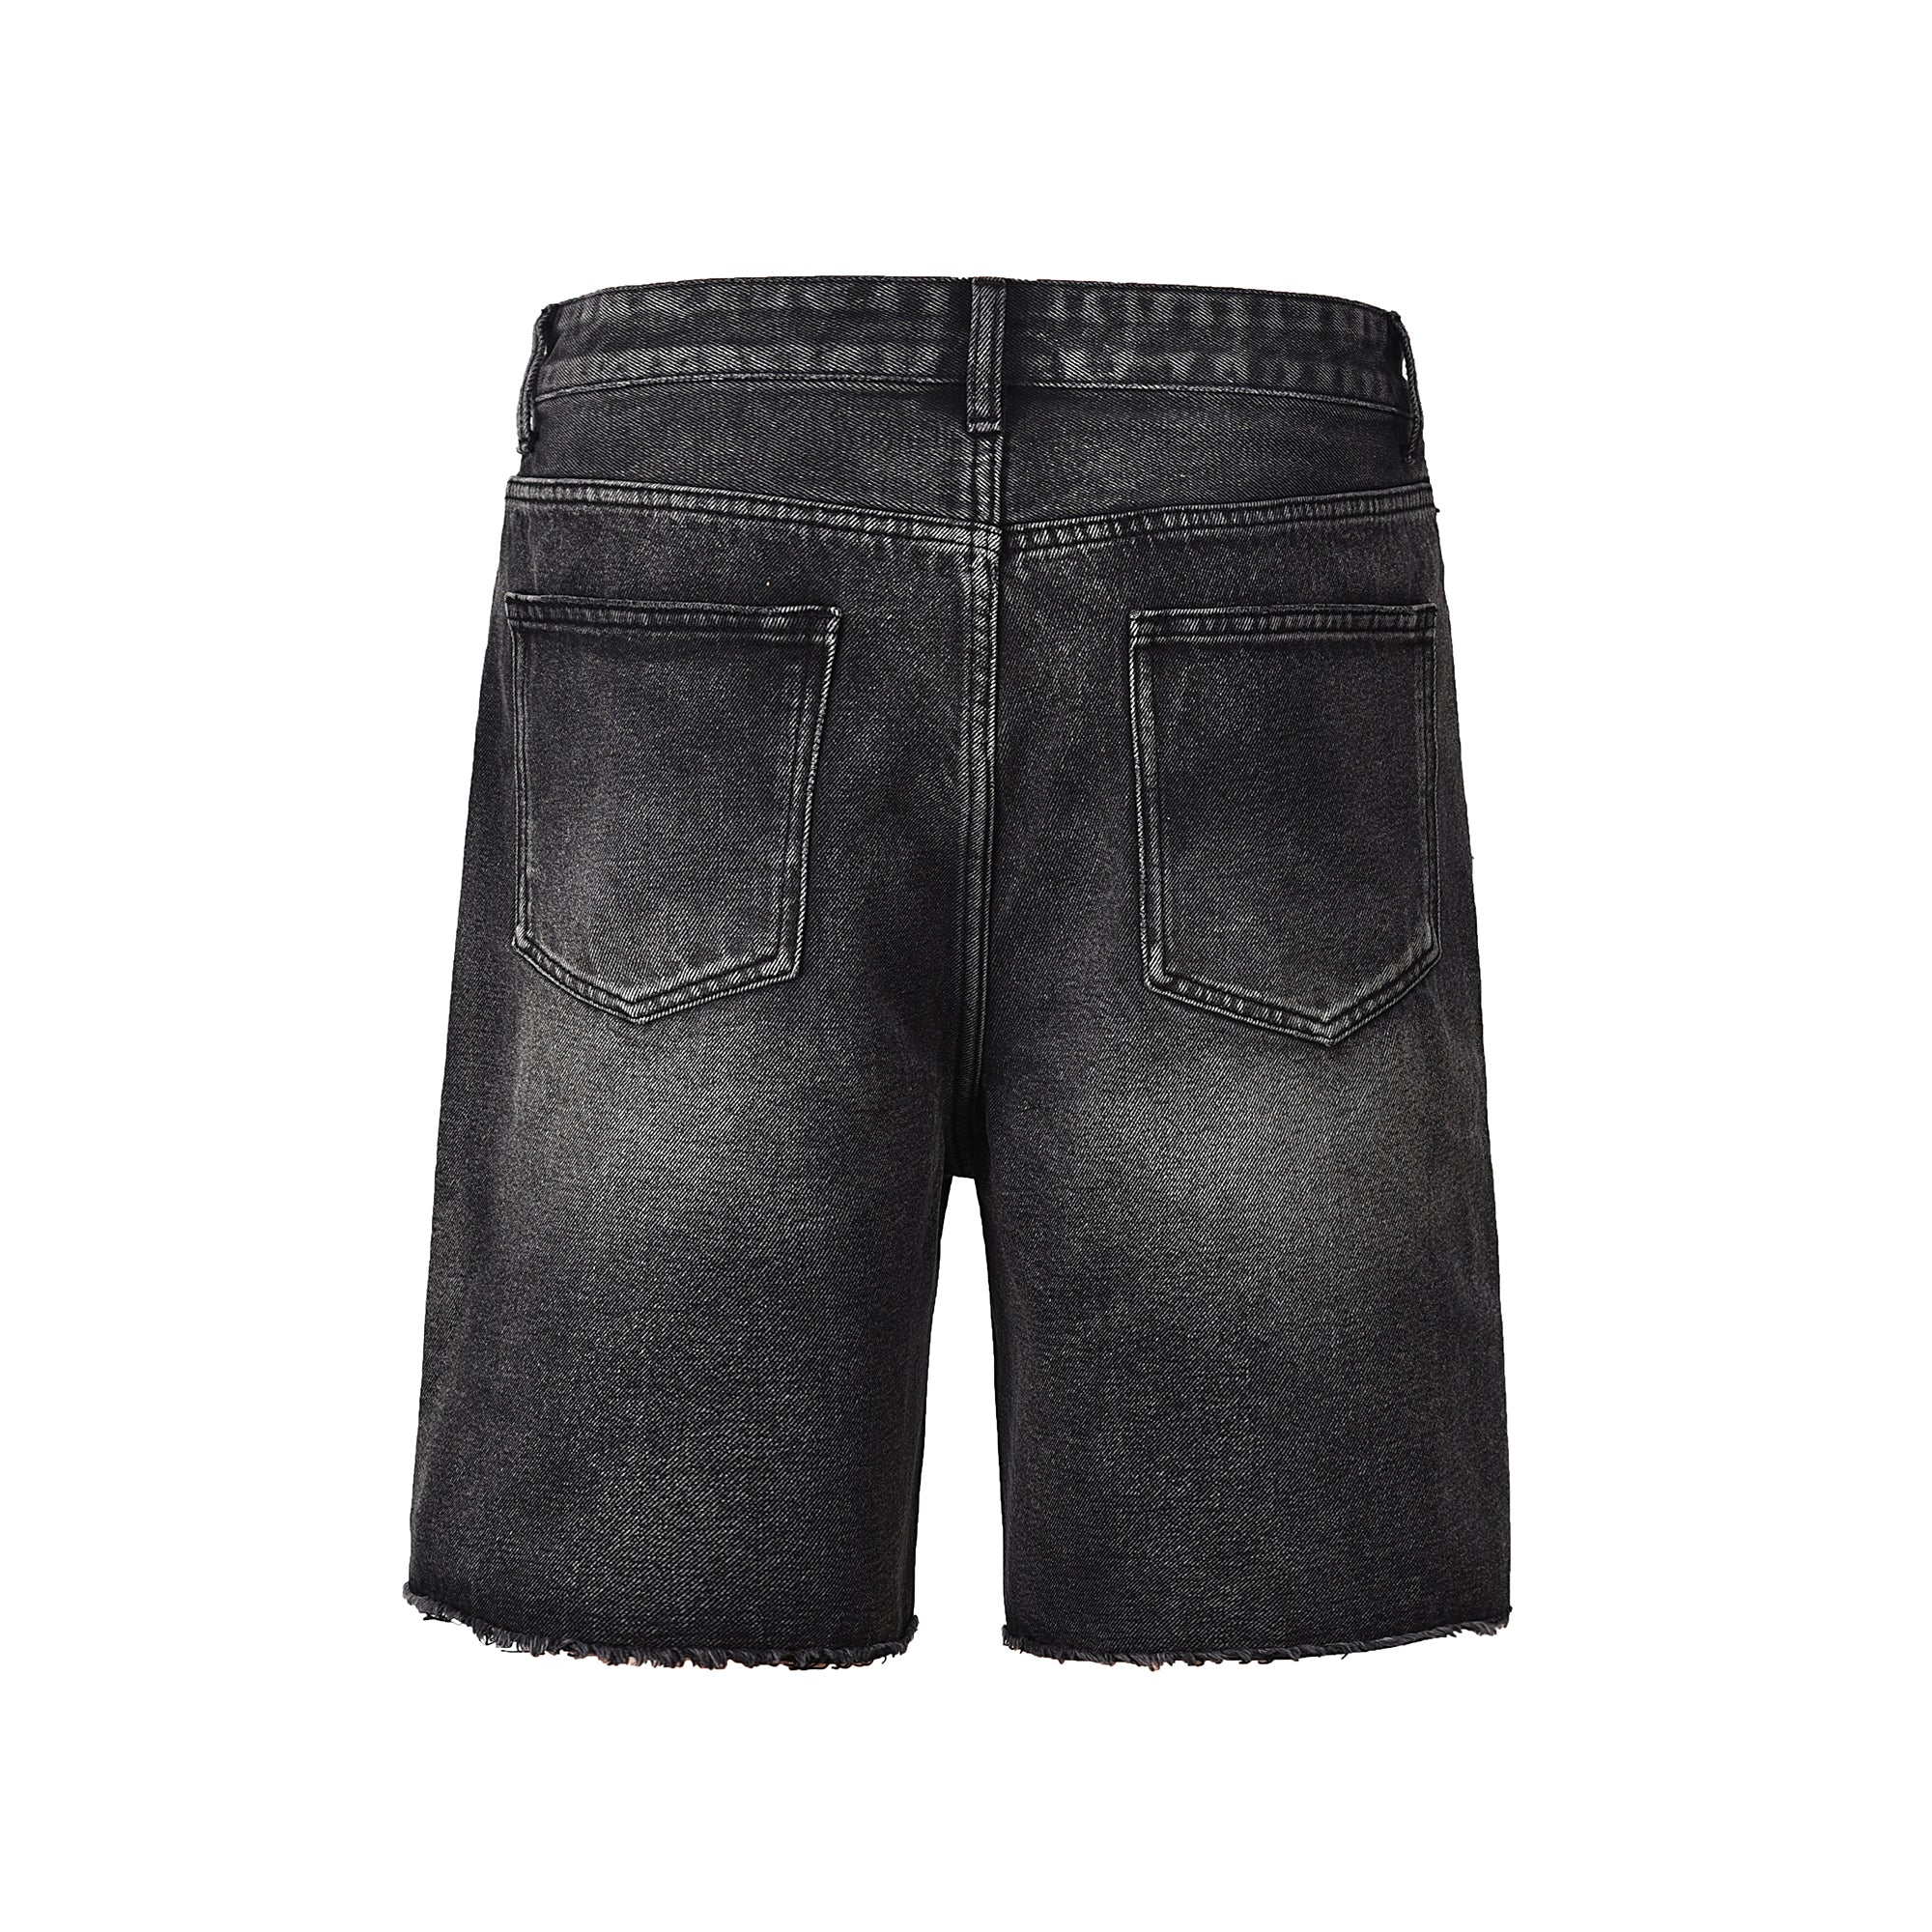 'Washed Ripped' Denim Shorts - Santo 